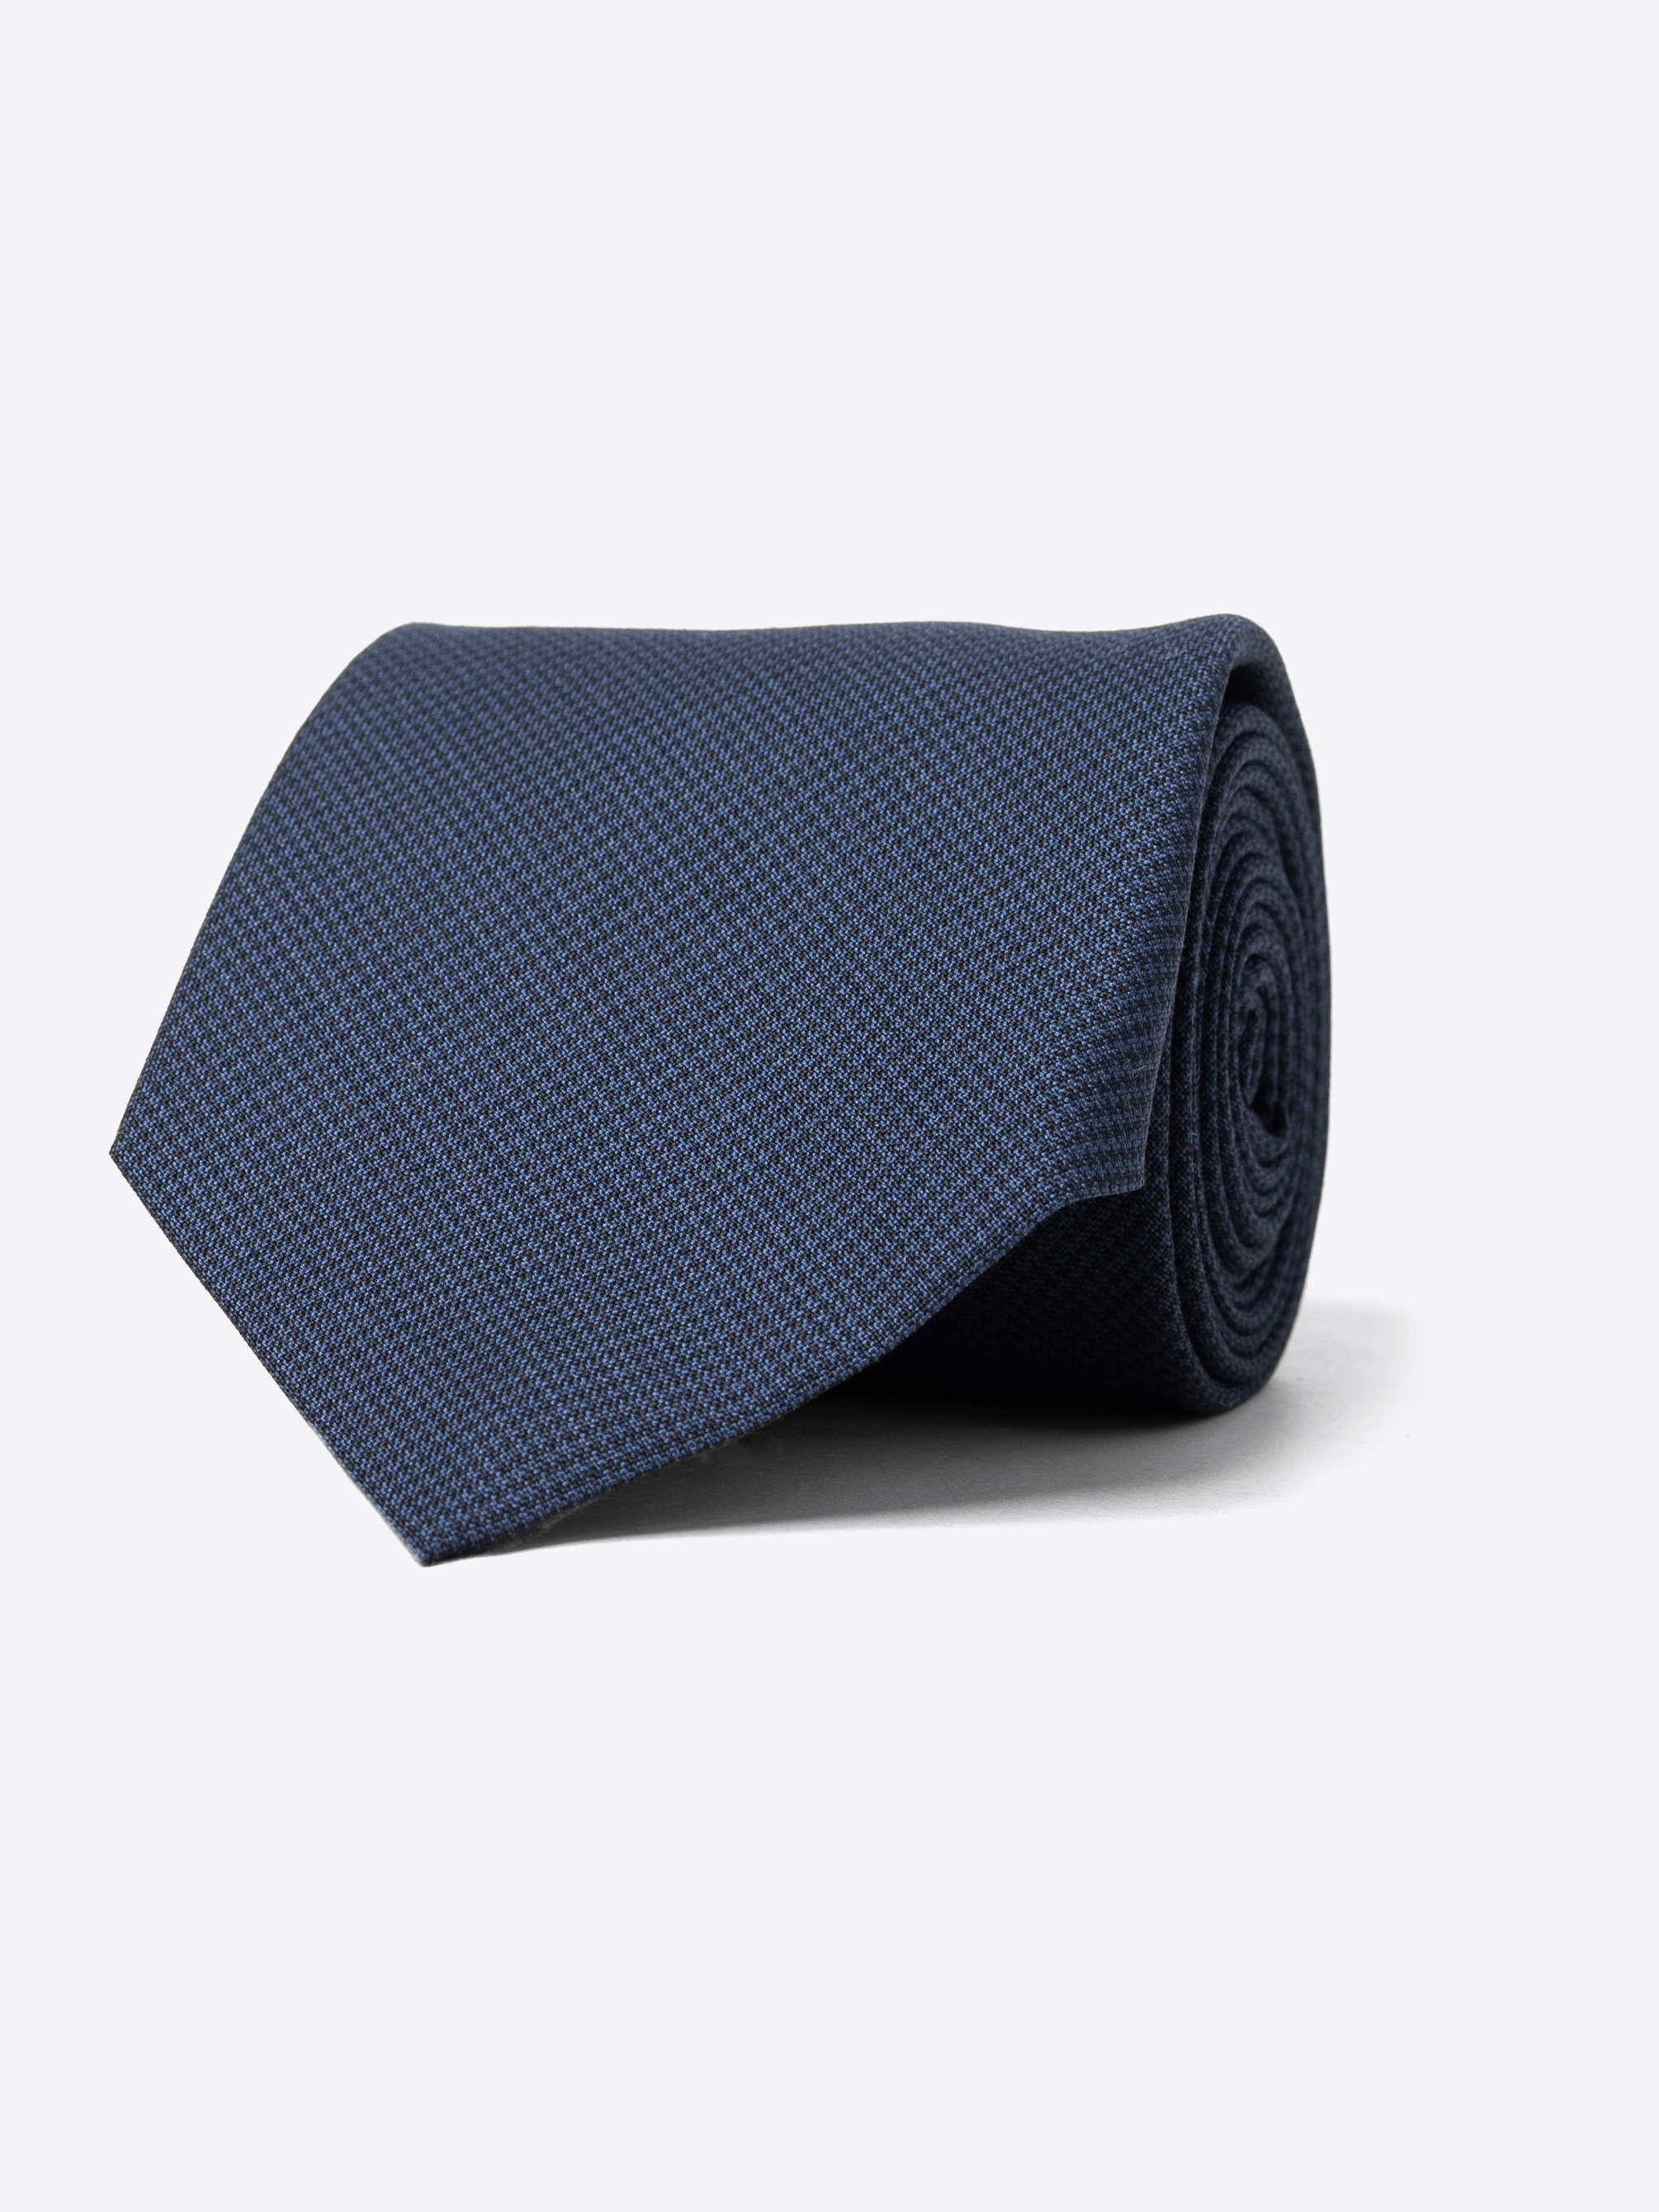 Zoom Image of Navy Mini Houndstooth Wool Tie